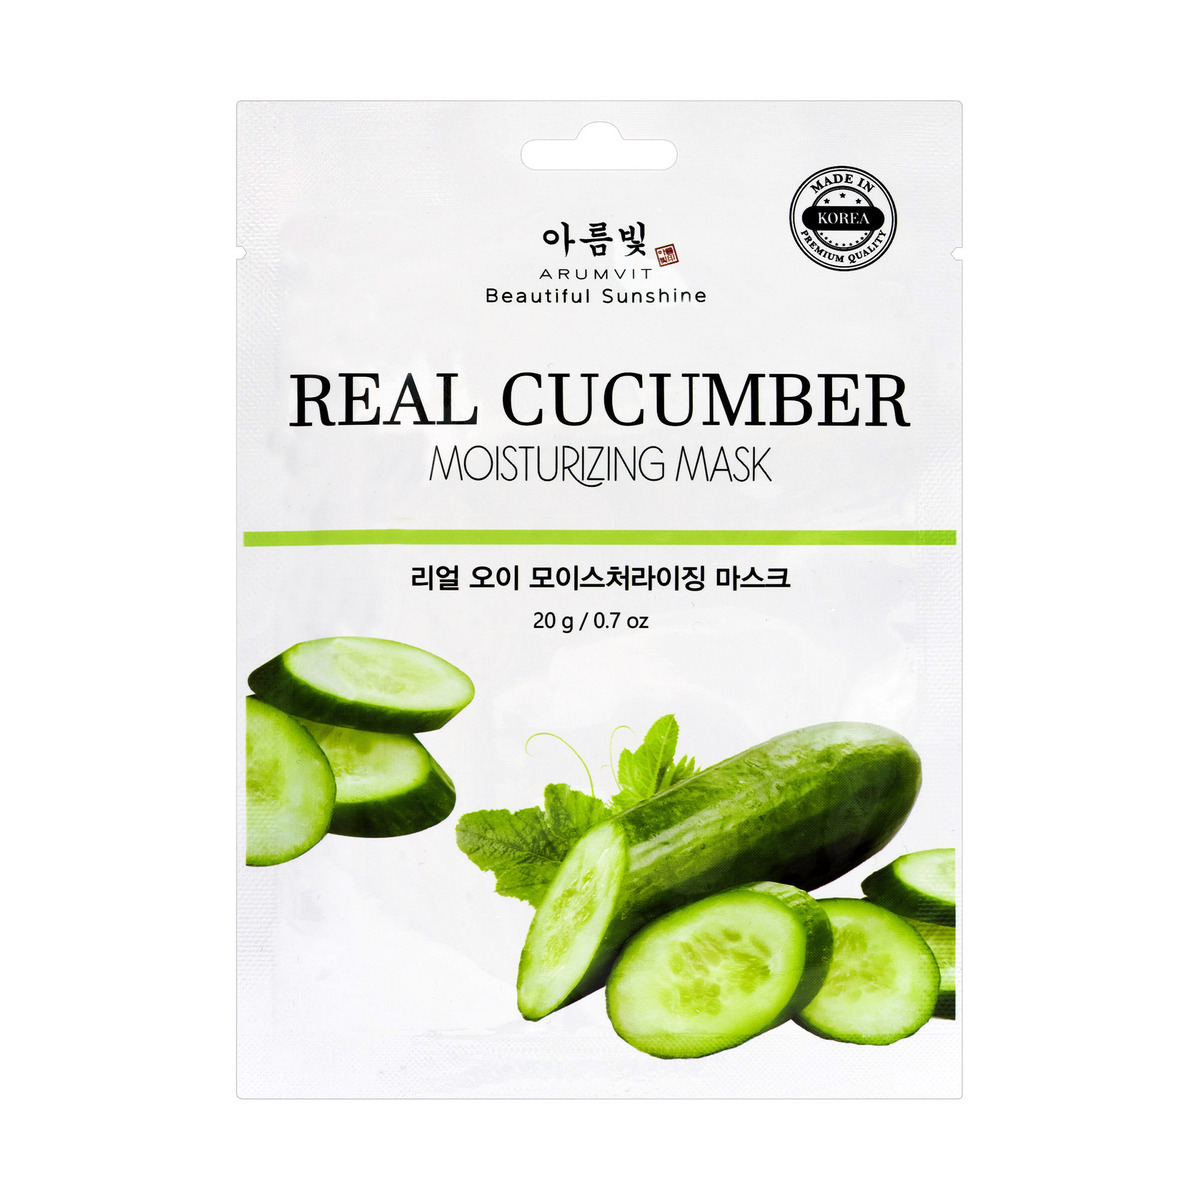 Arumvit Cucumber Moisturizing Mask 20g